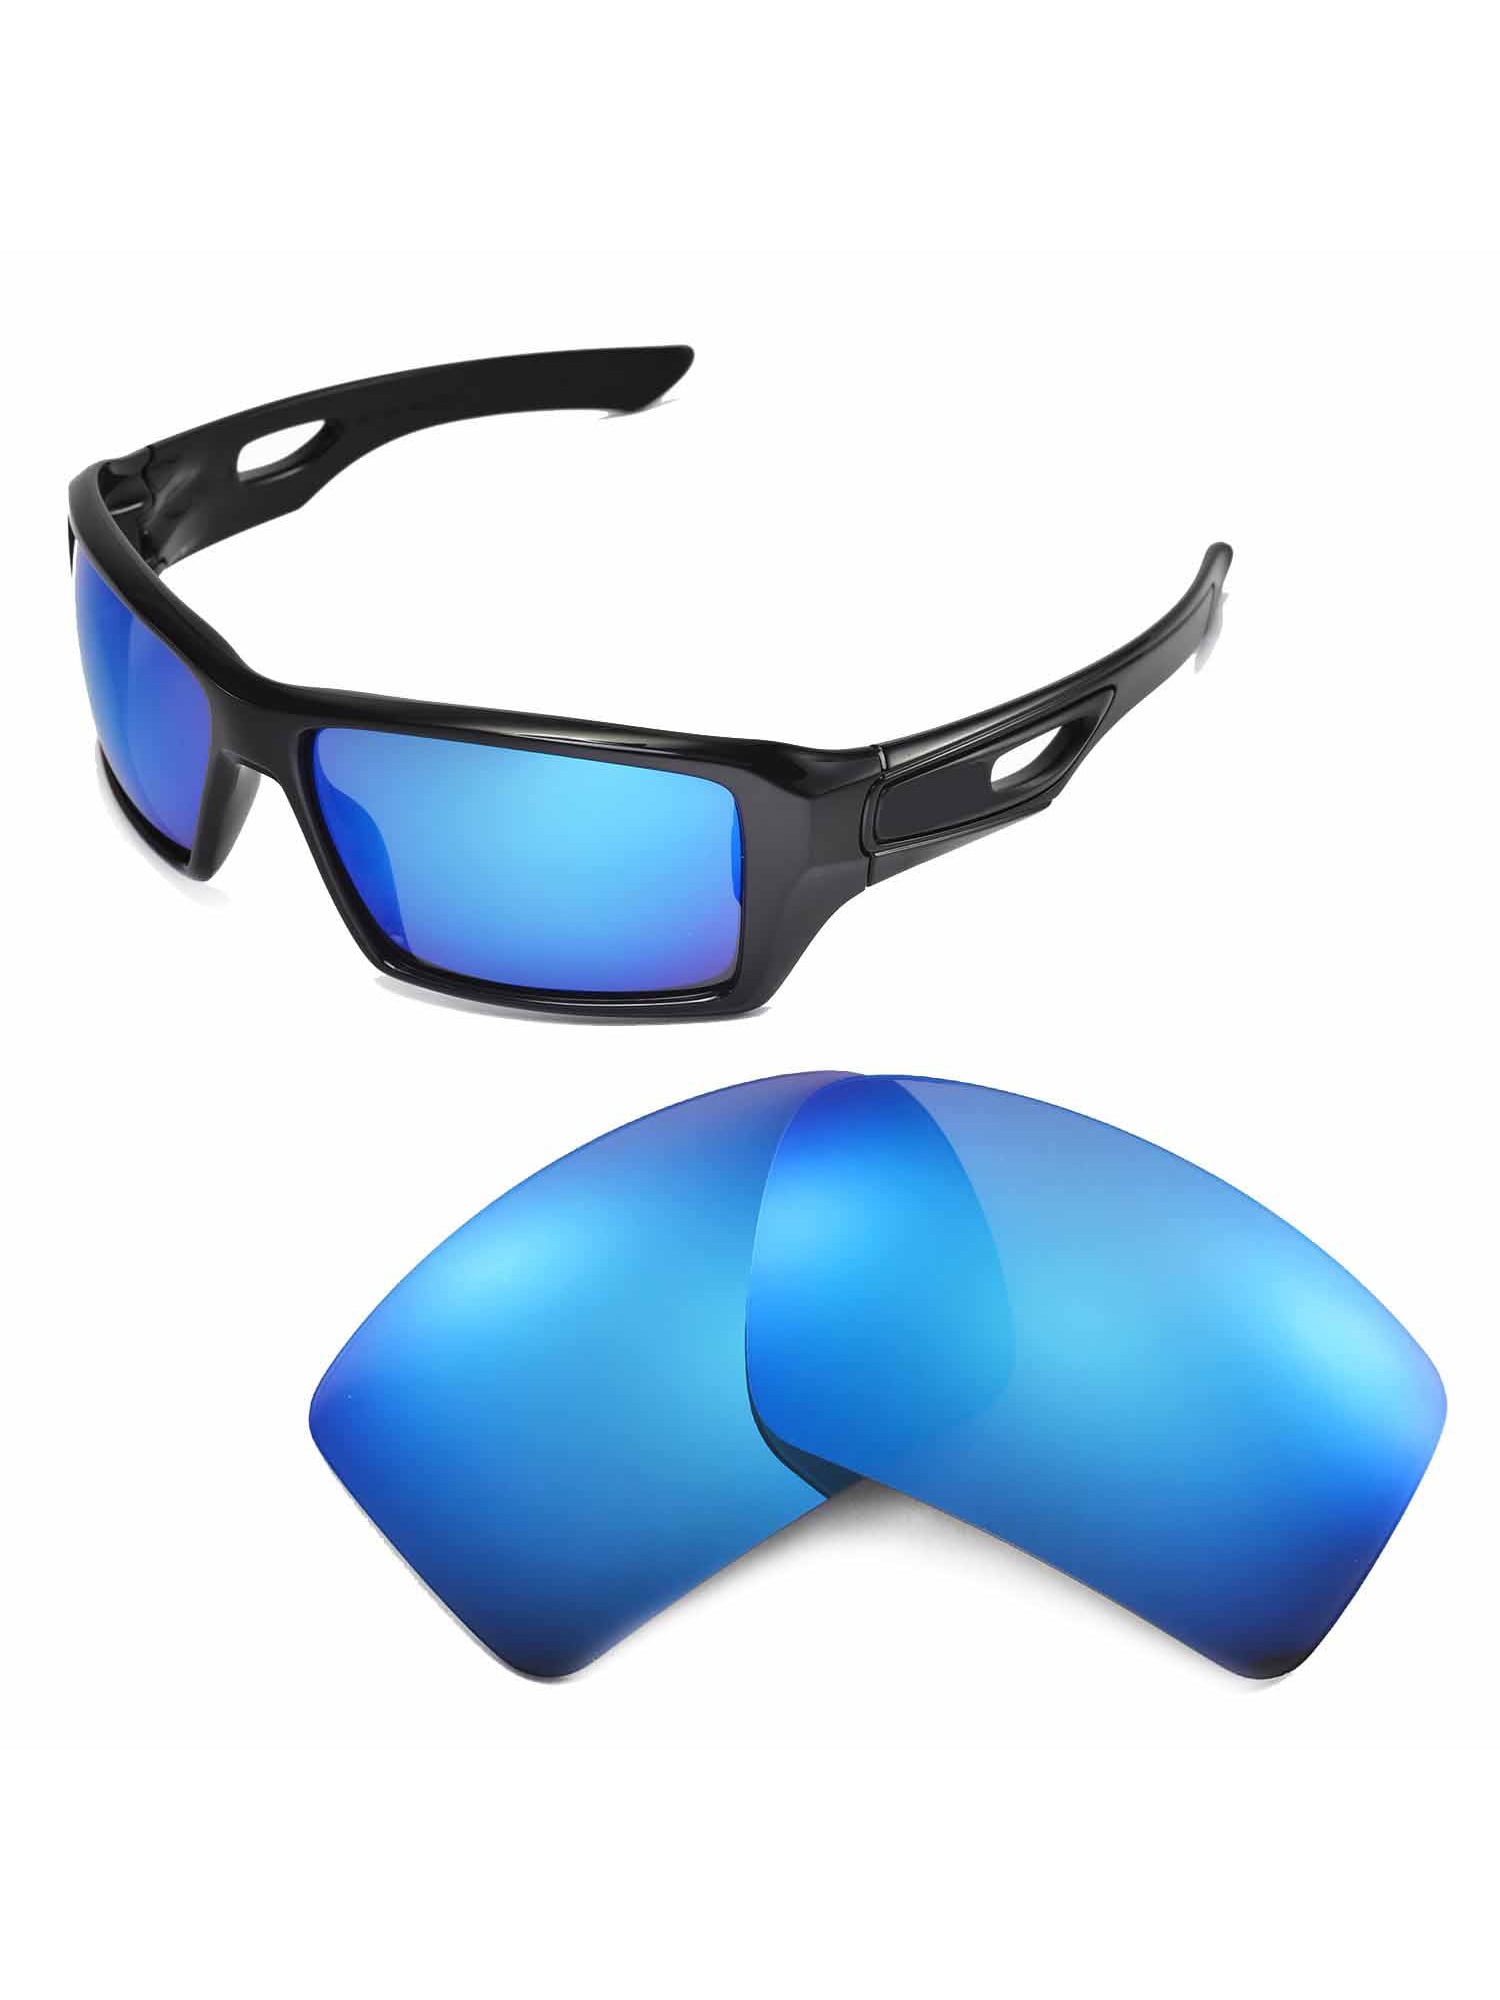 eyepatch 2 sunglasses